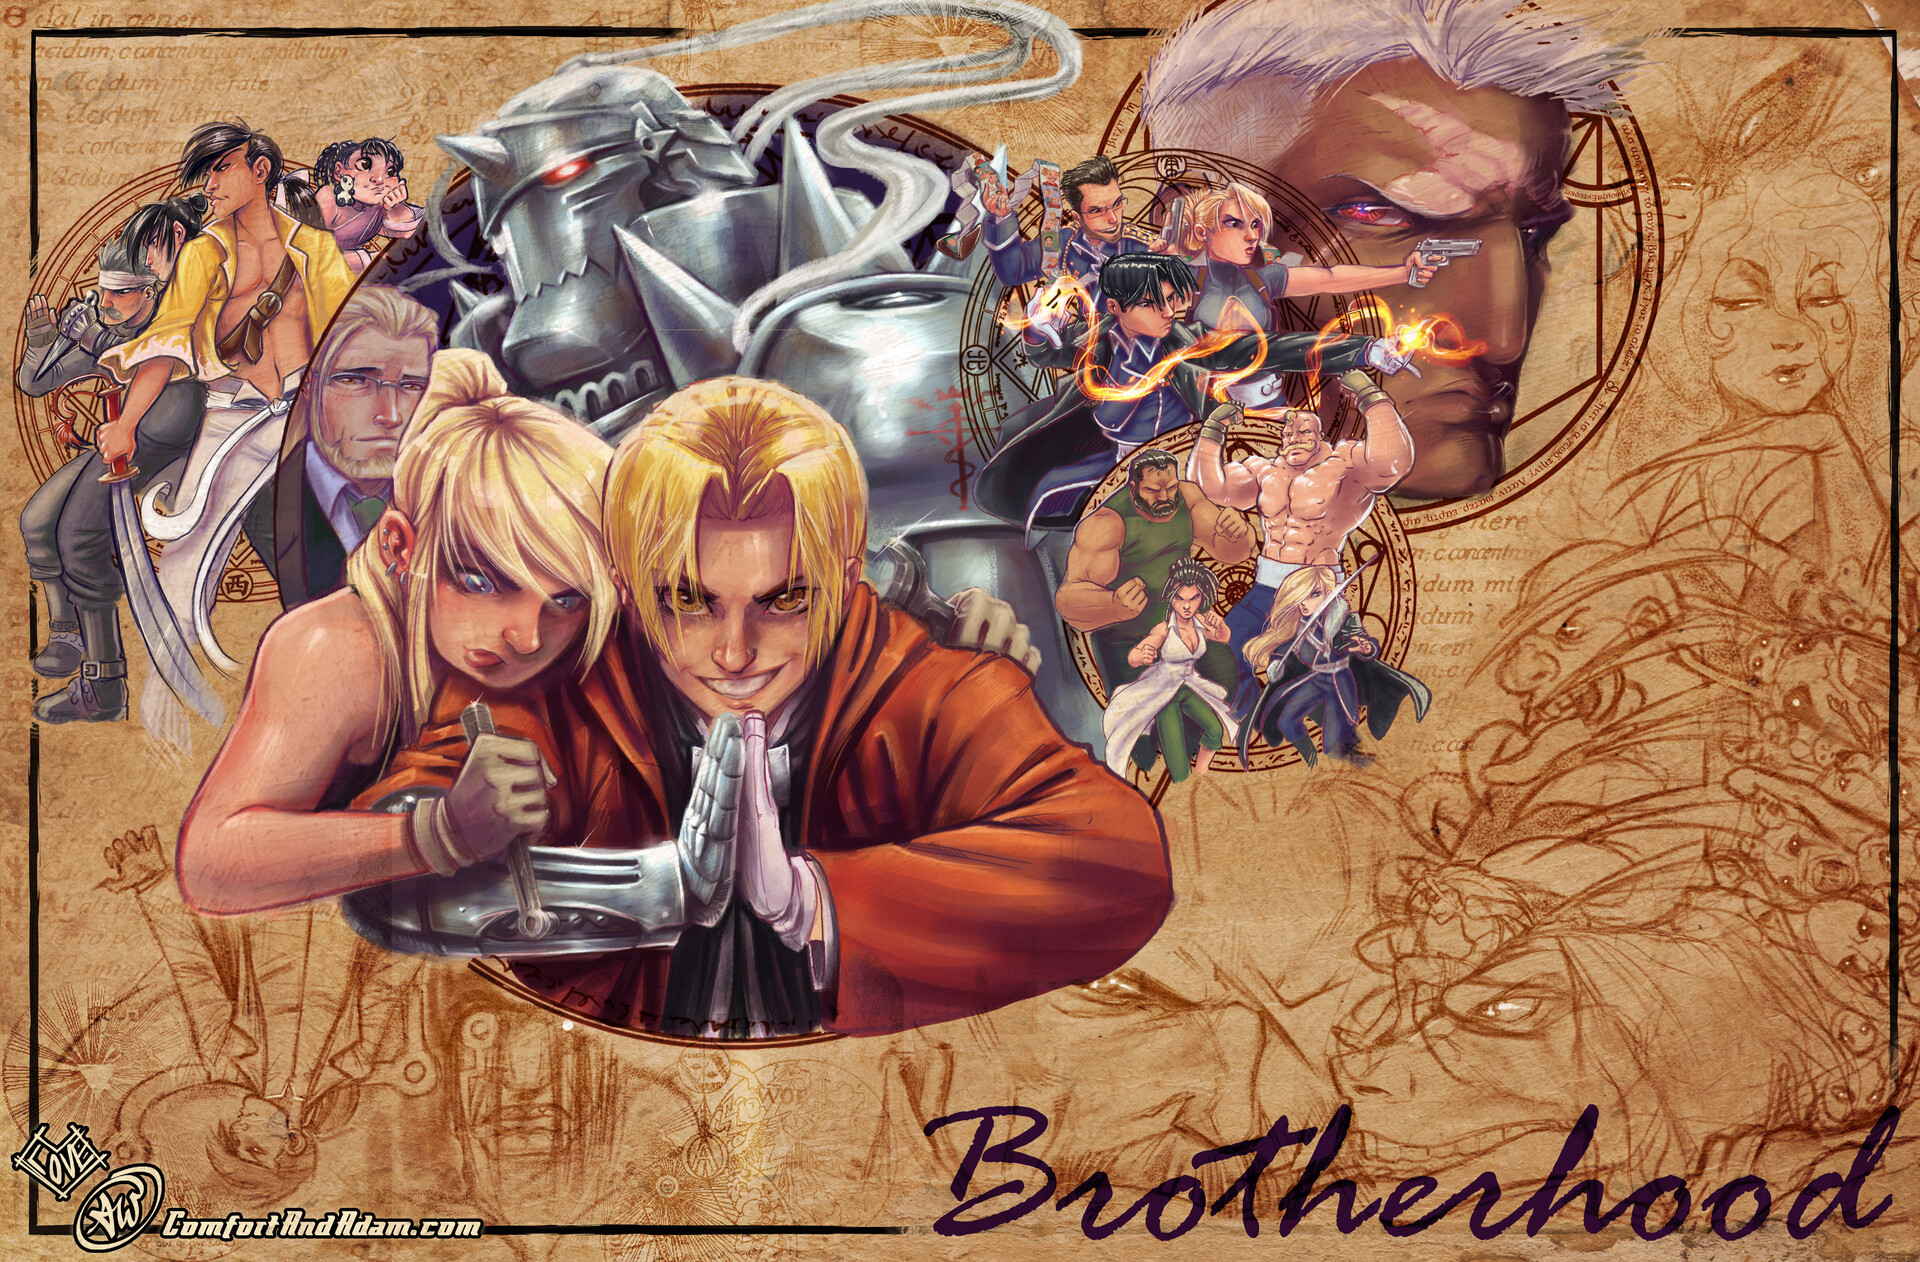 ArtStation - Fullmetal Alchemist Brotherhood Character Portraits